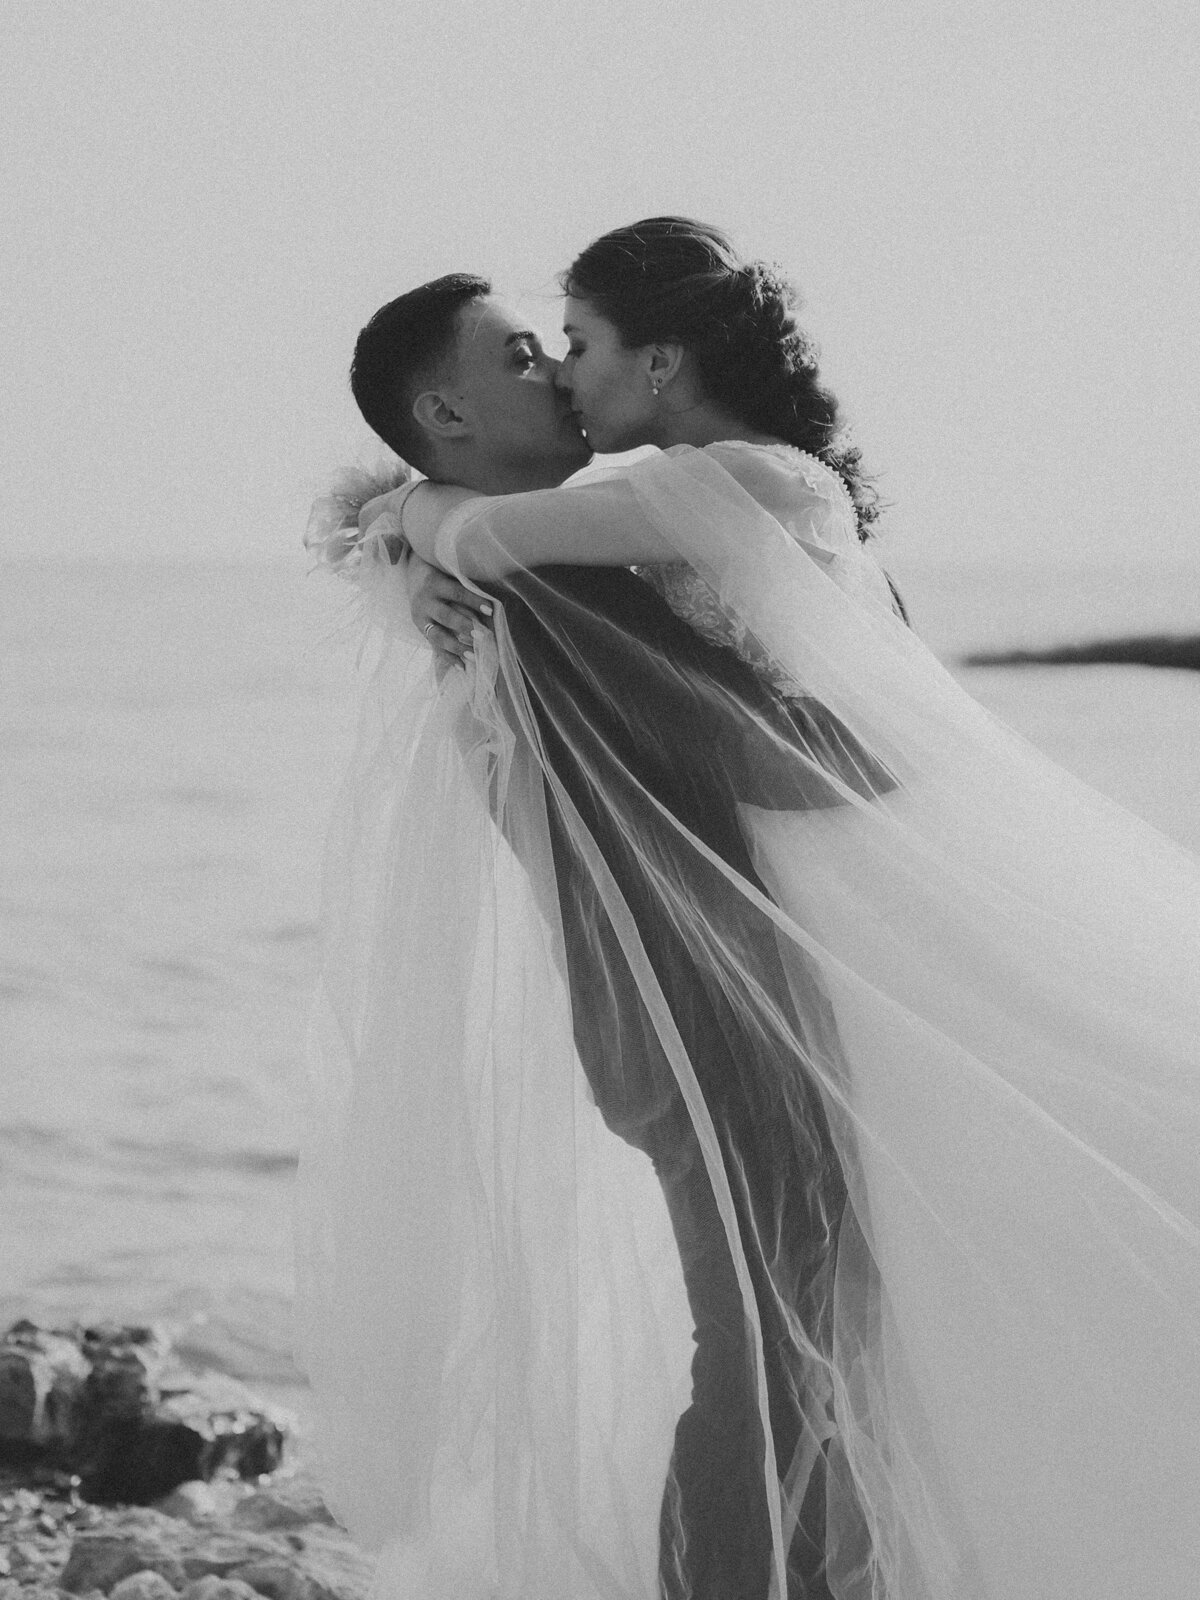 A beach wedding couple kissing each other